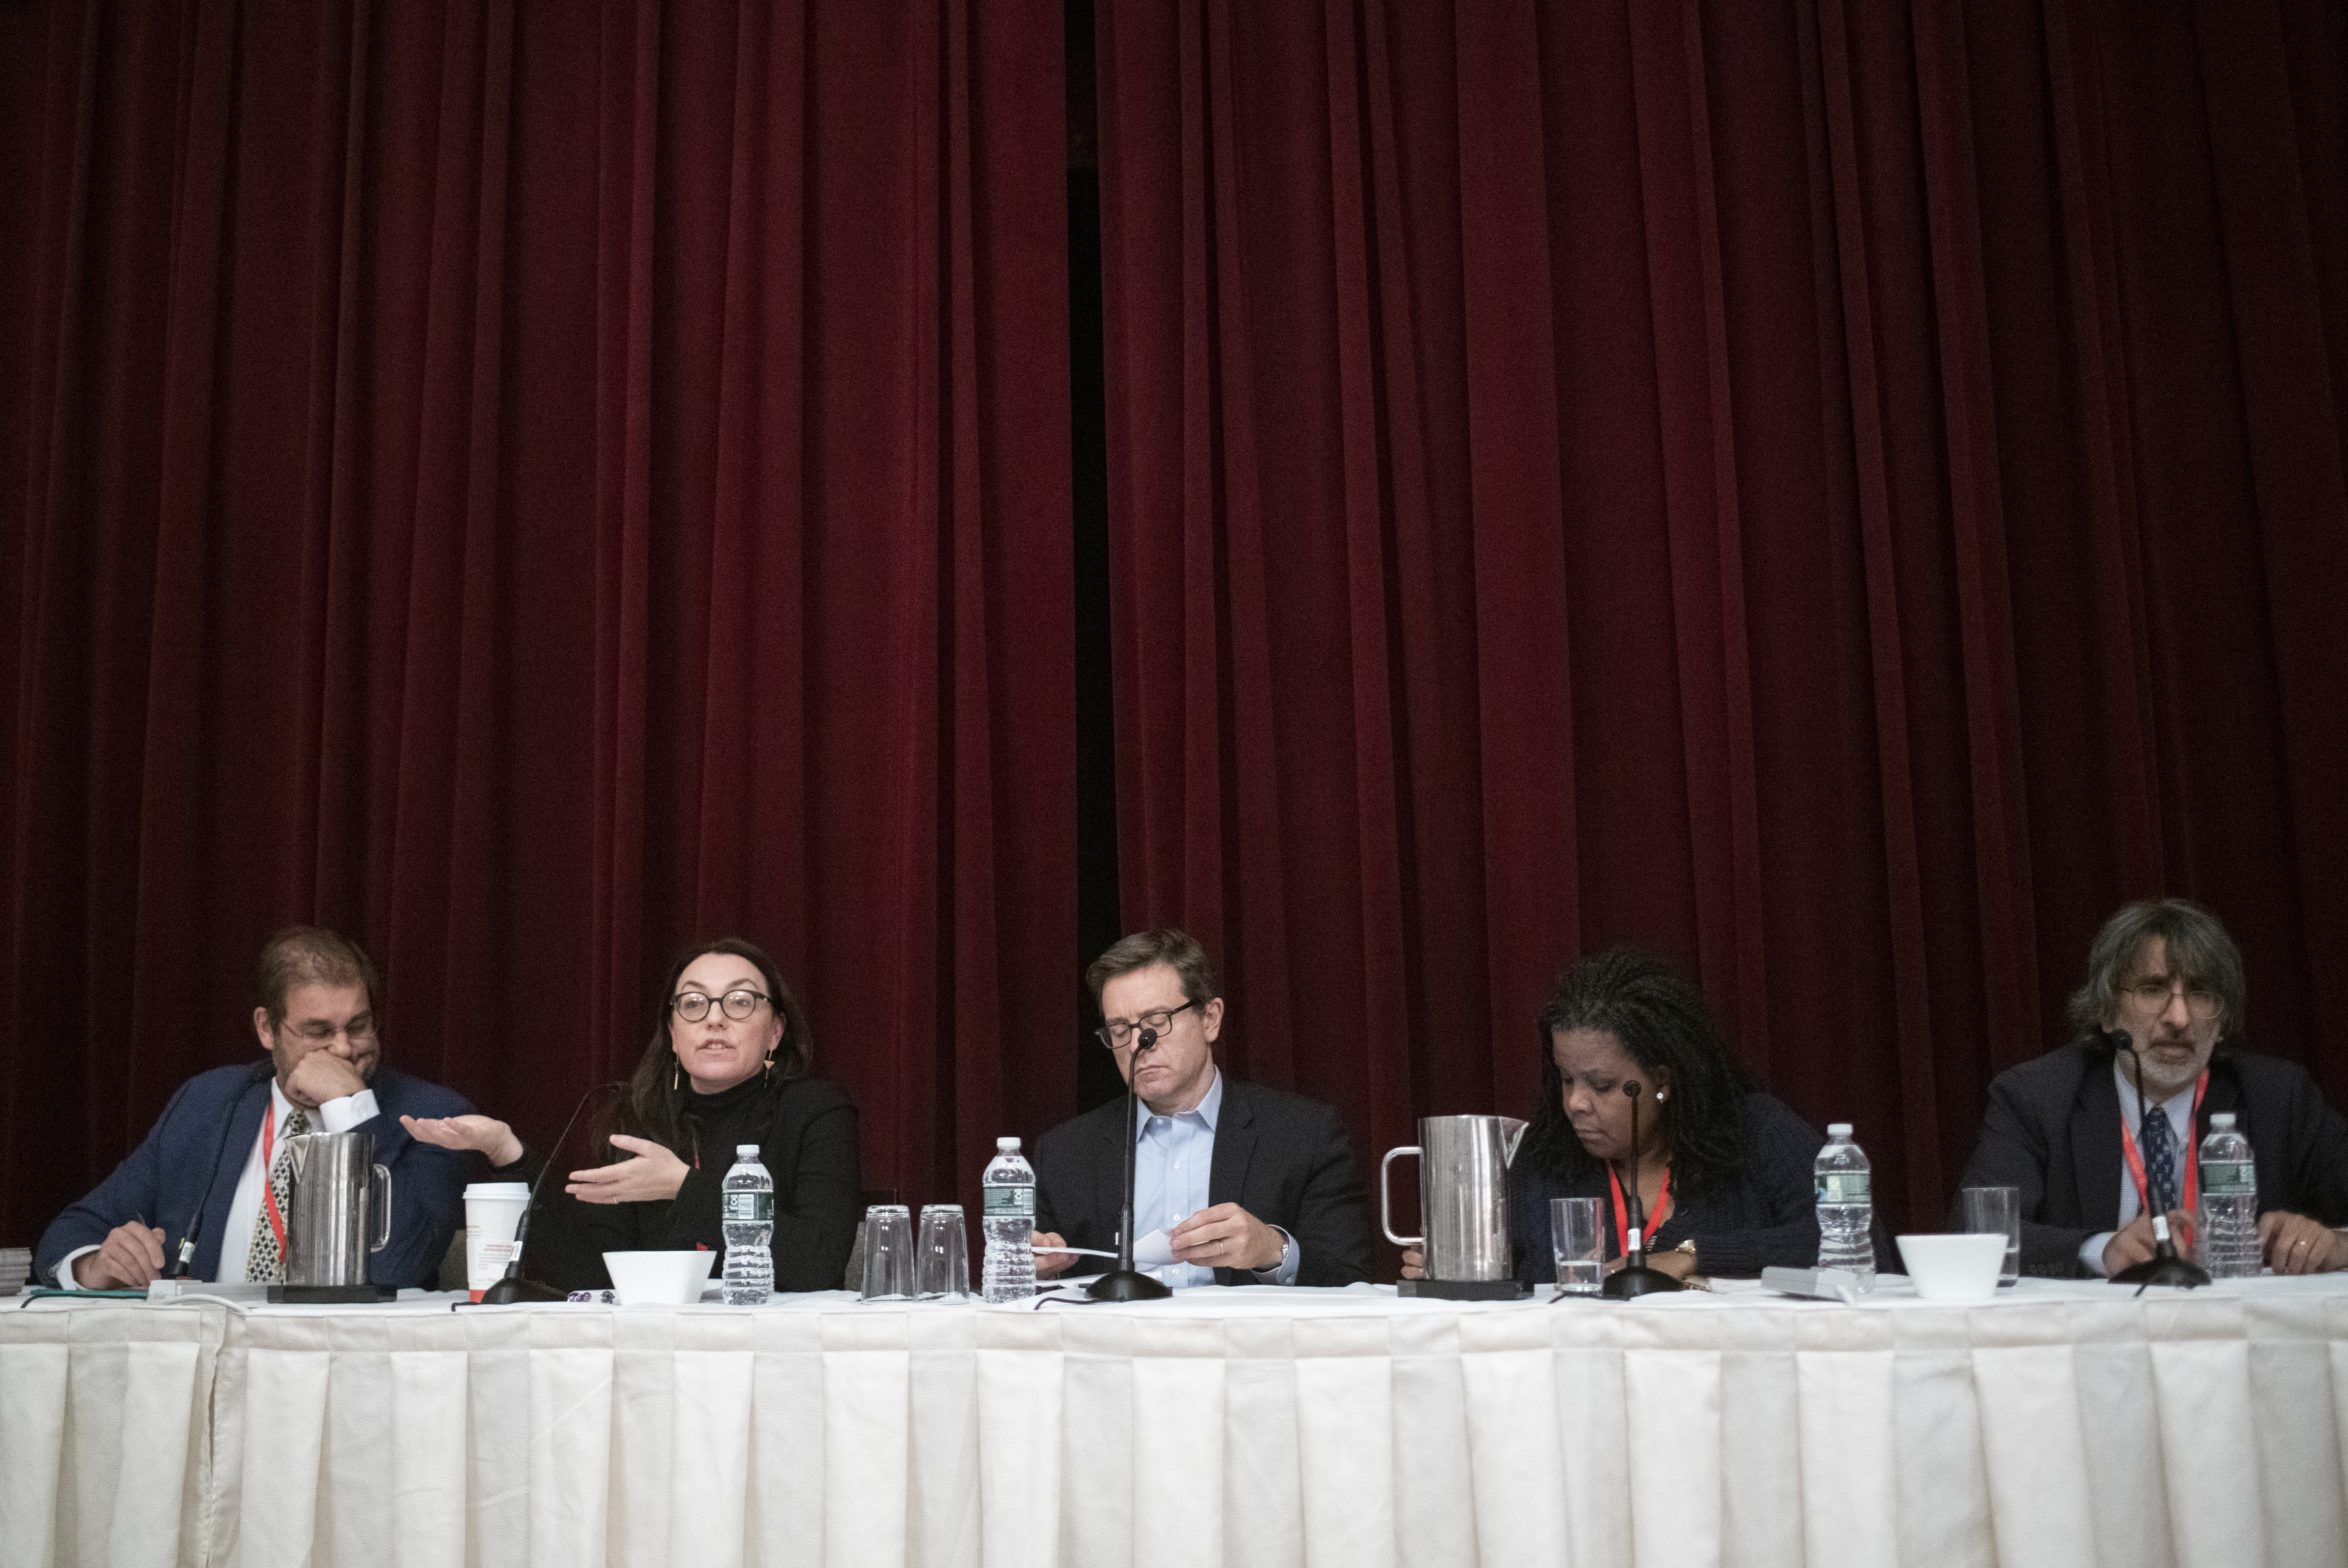 Jeremi Suri, Maggie Blackhawk, Julian Zelizer, Annette Gordon-Reed, and Akhil Reed Amar at the Late-Breaking Plenary.